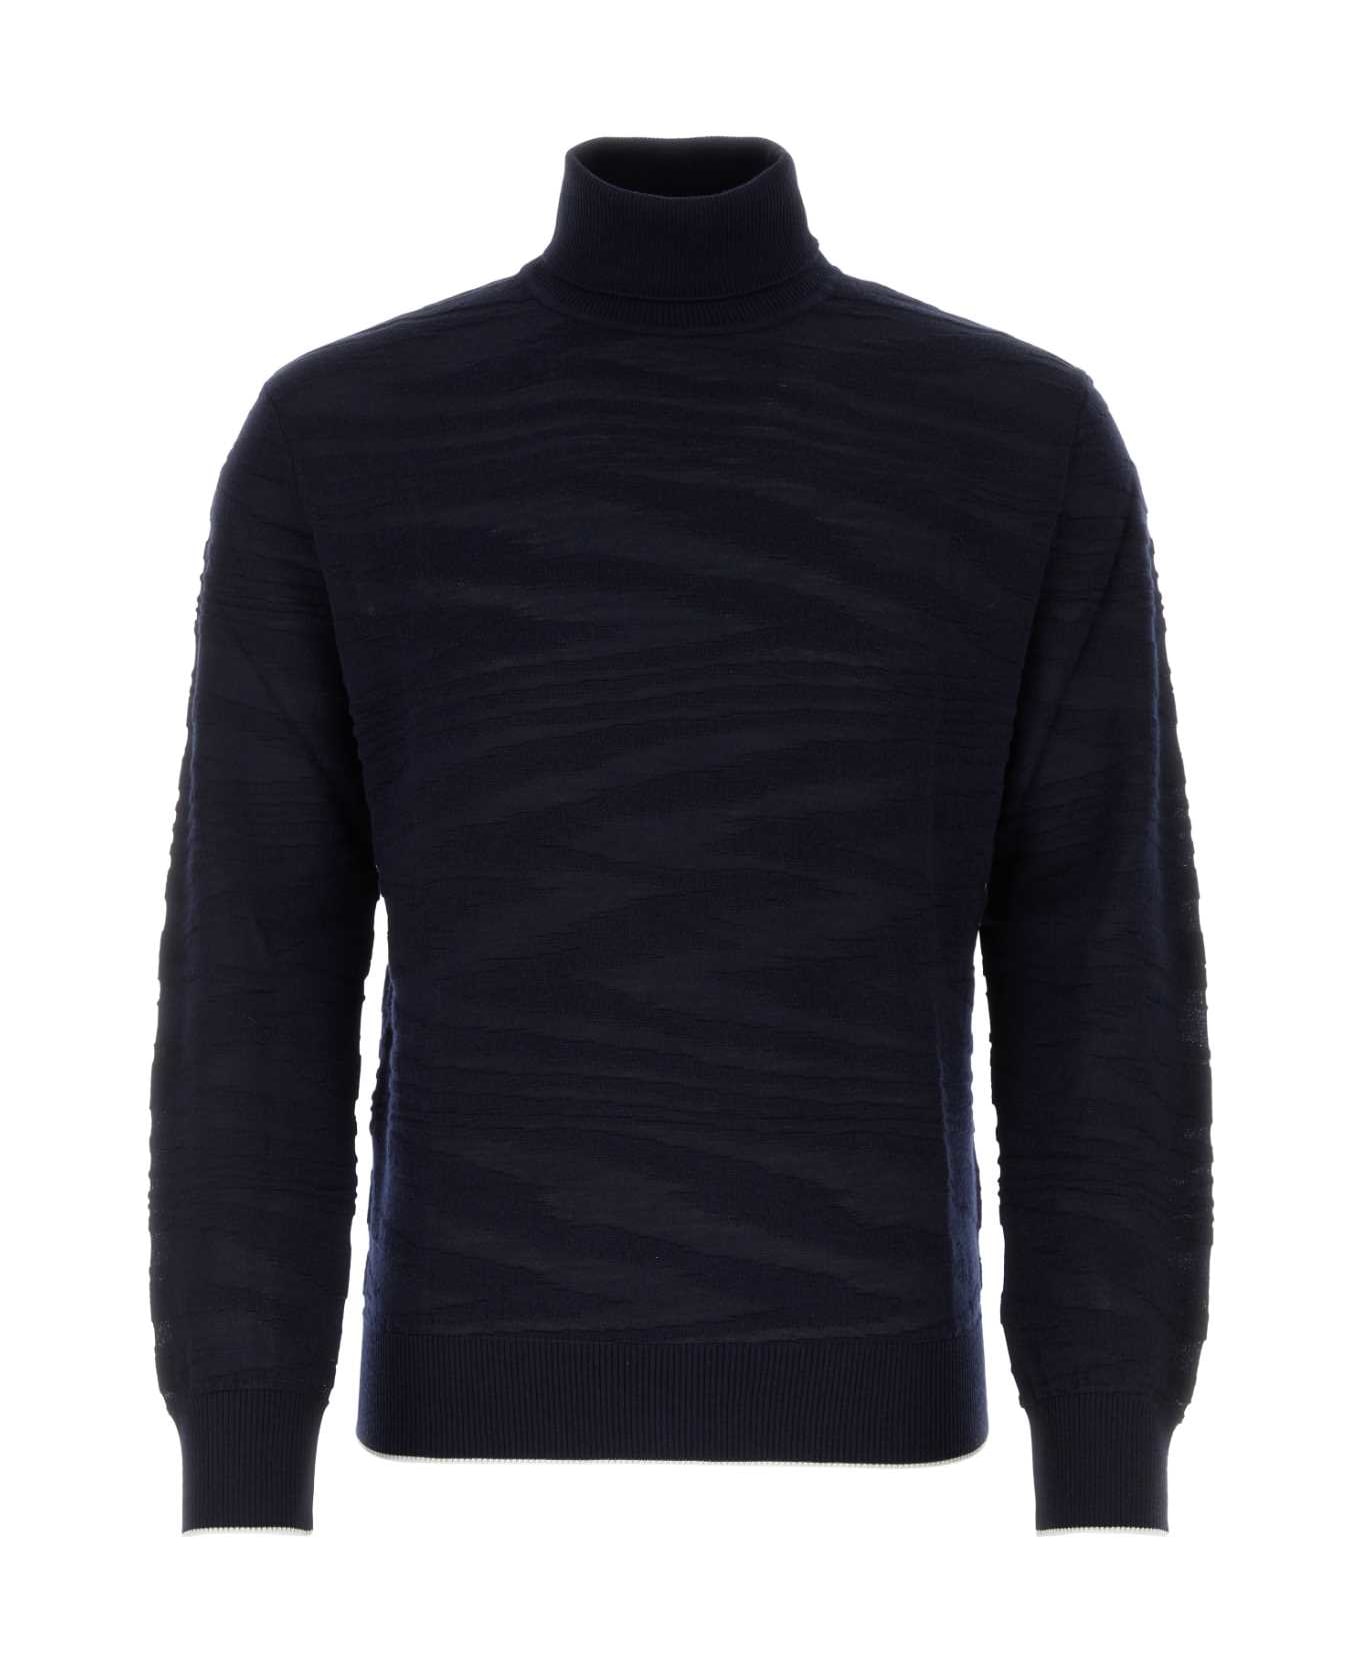 Missoni Midnight Blue Wool Blend Sweater - NAVY ニットウェア